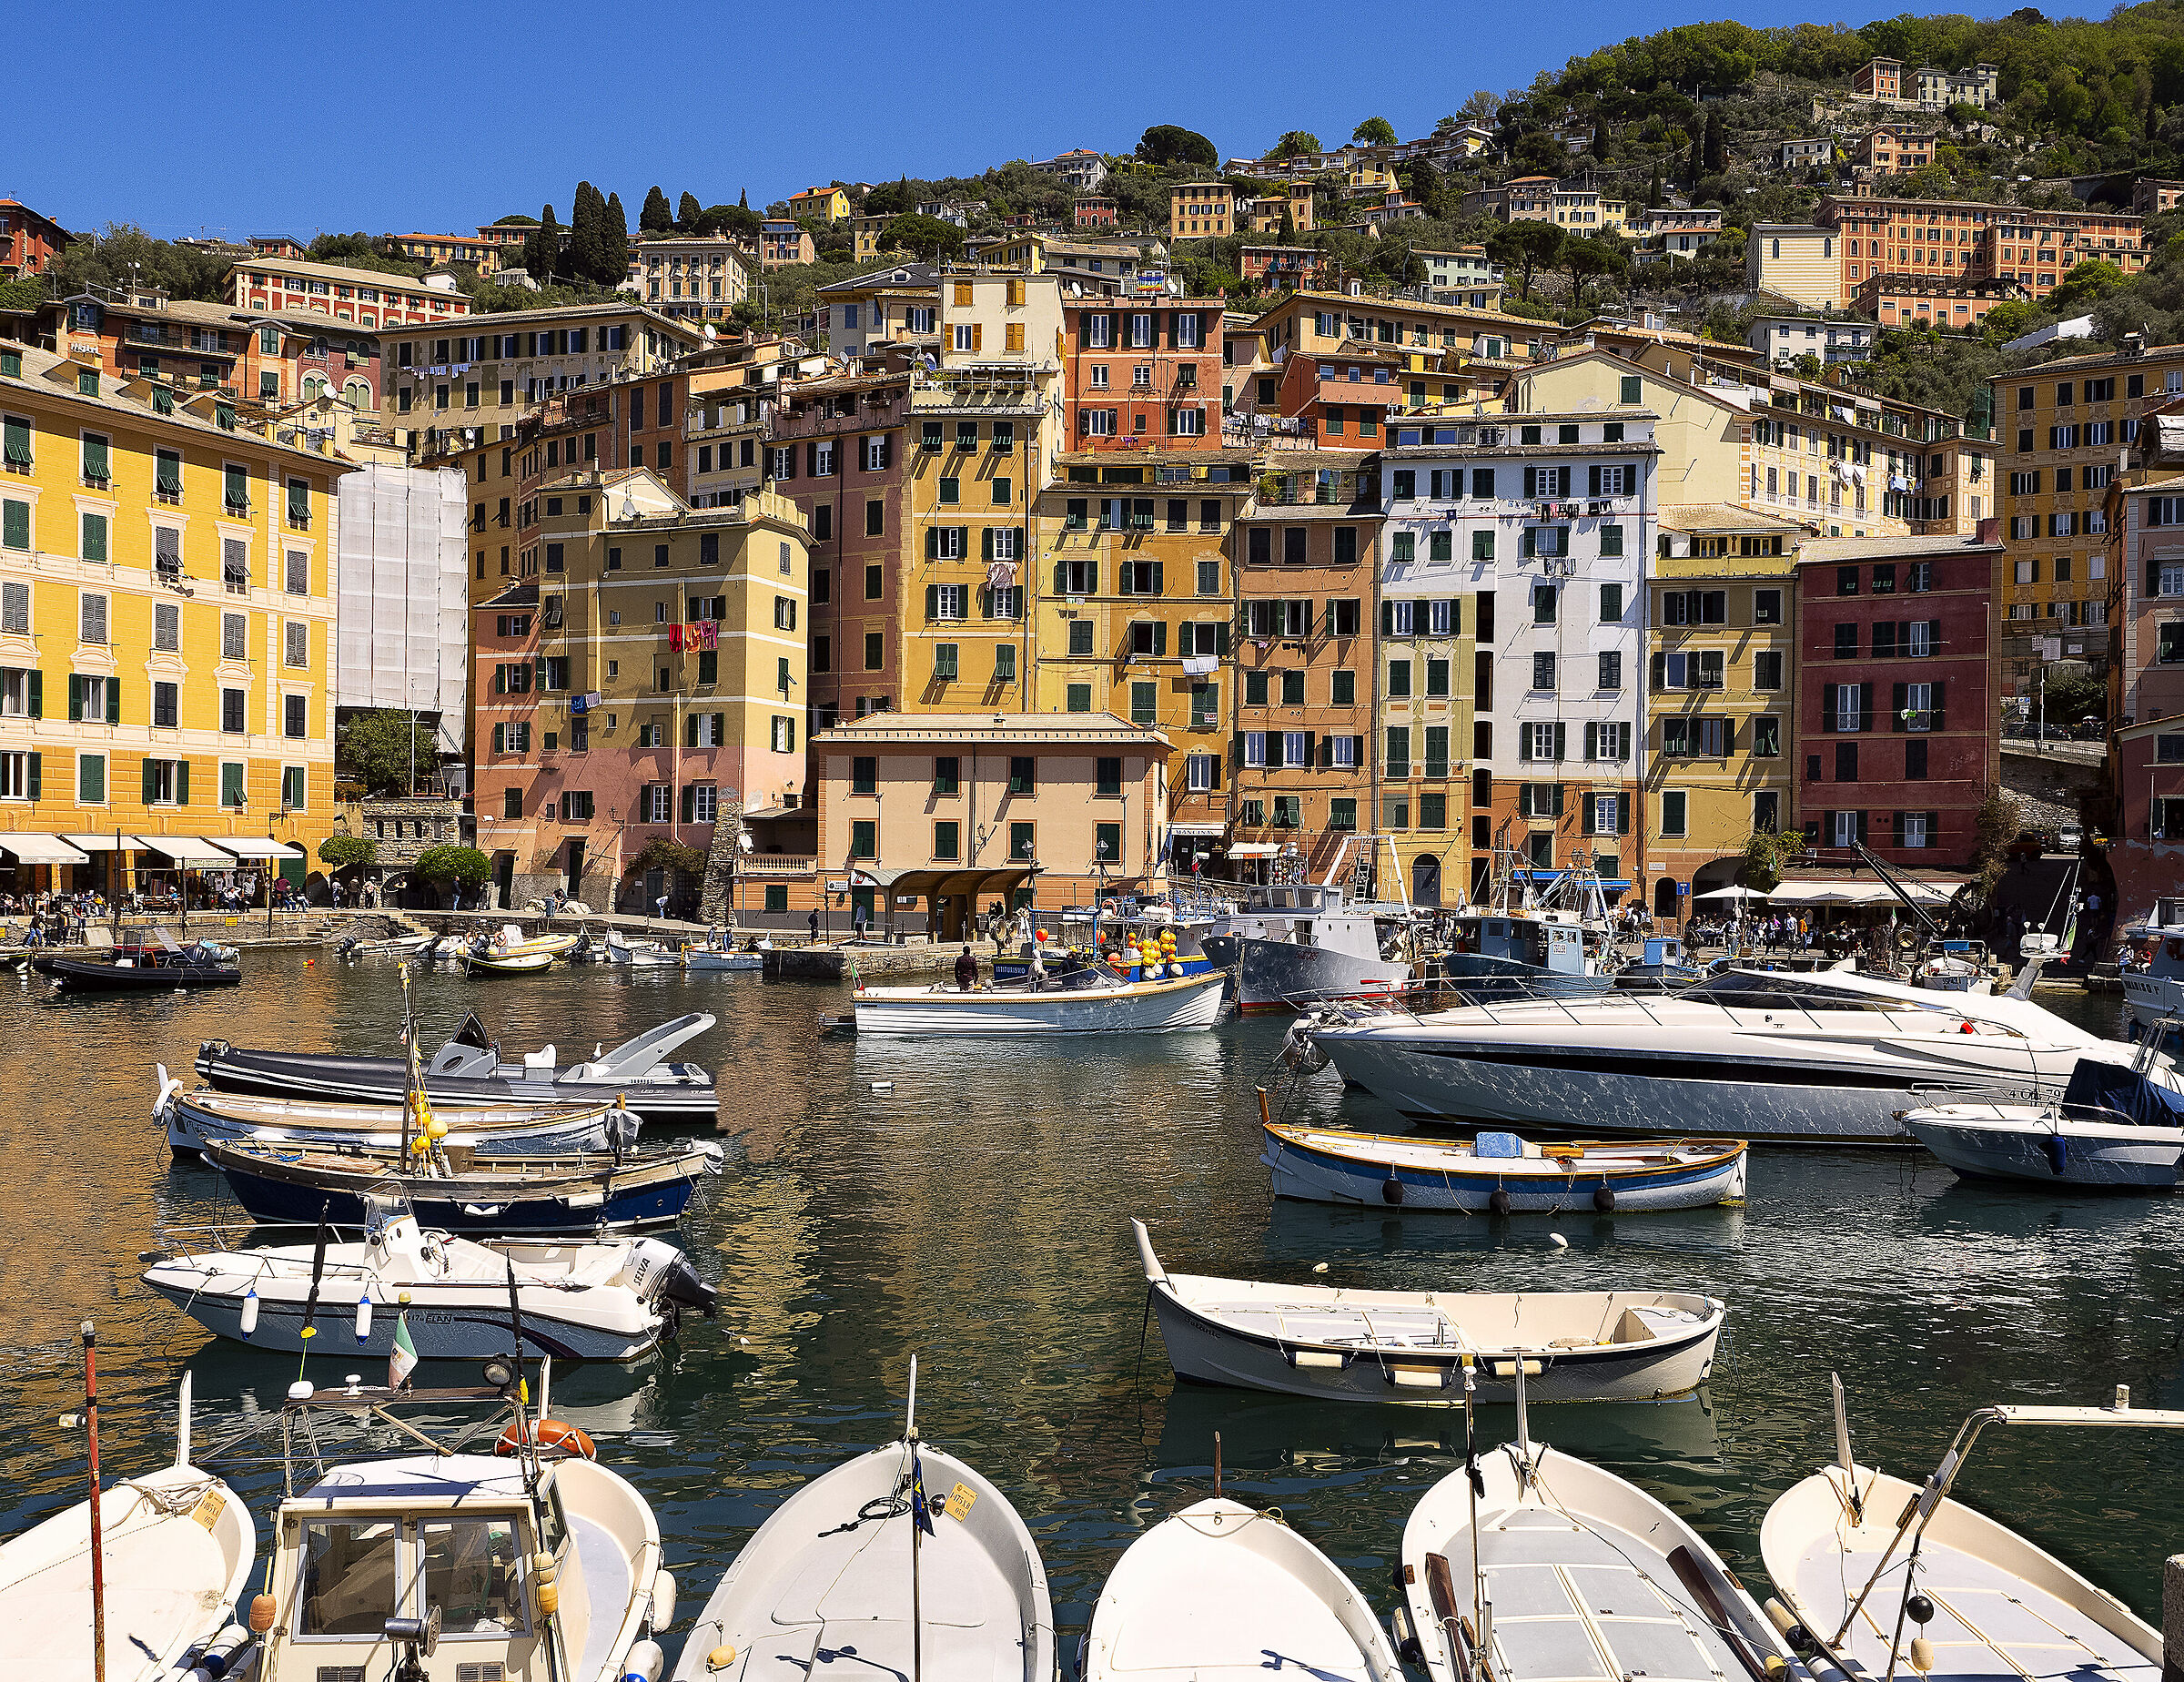 Camogli - Glimpse of the marina -Postcard...